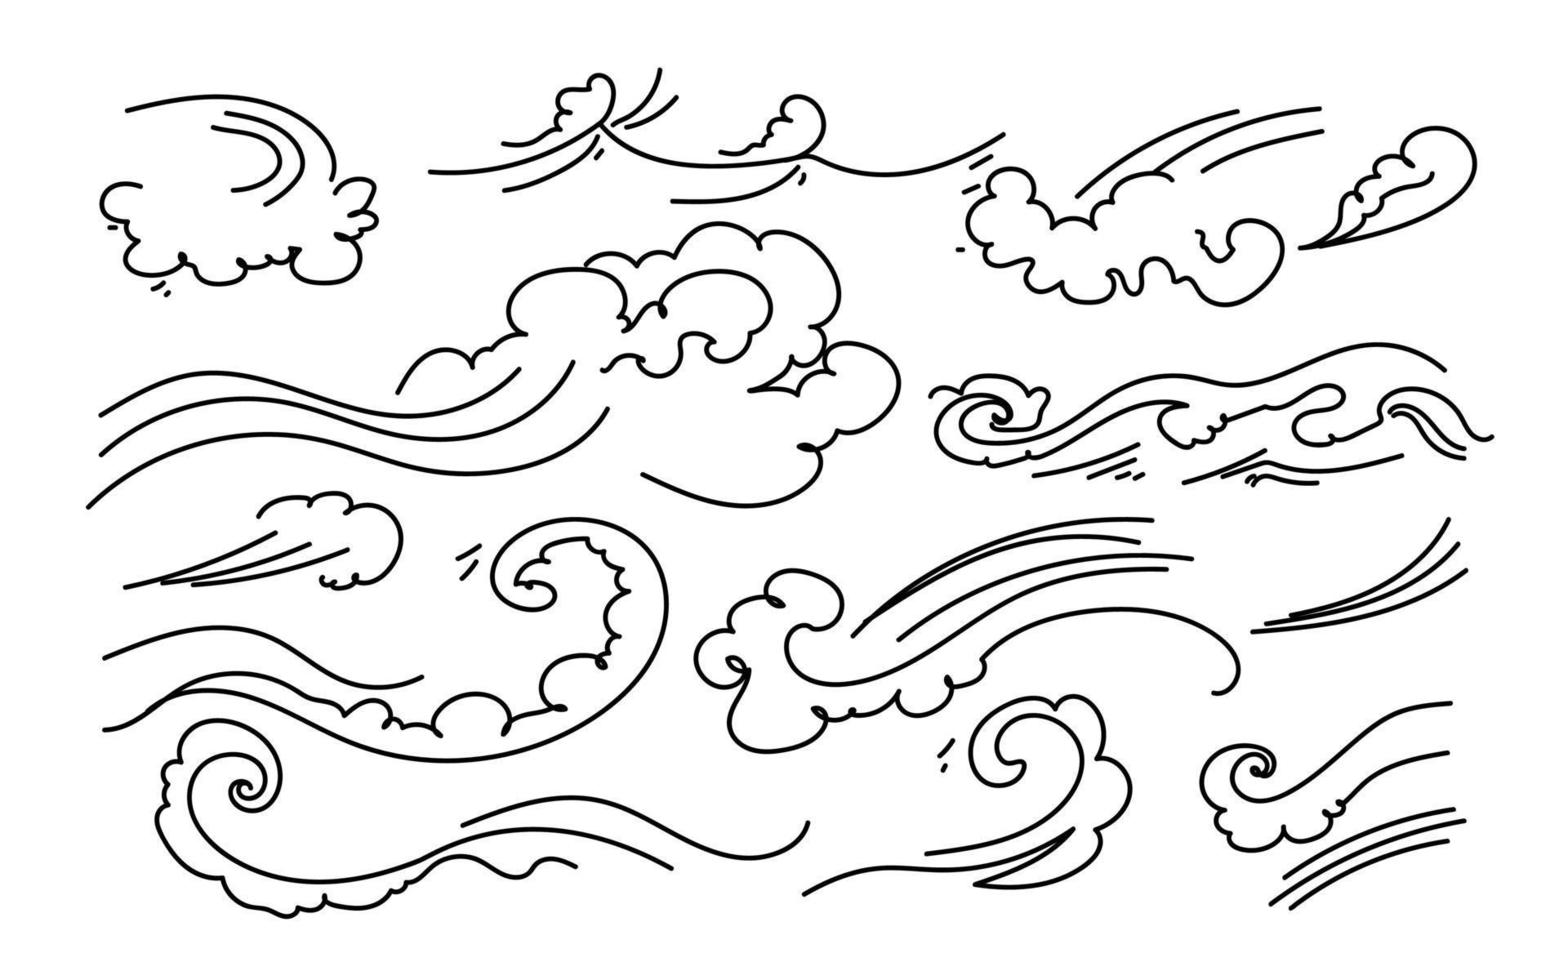 tsunami golven achtergrond doodle schets hand getekende vector. vector